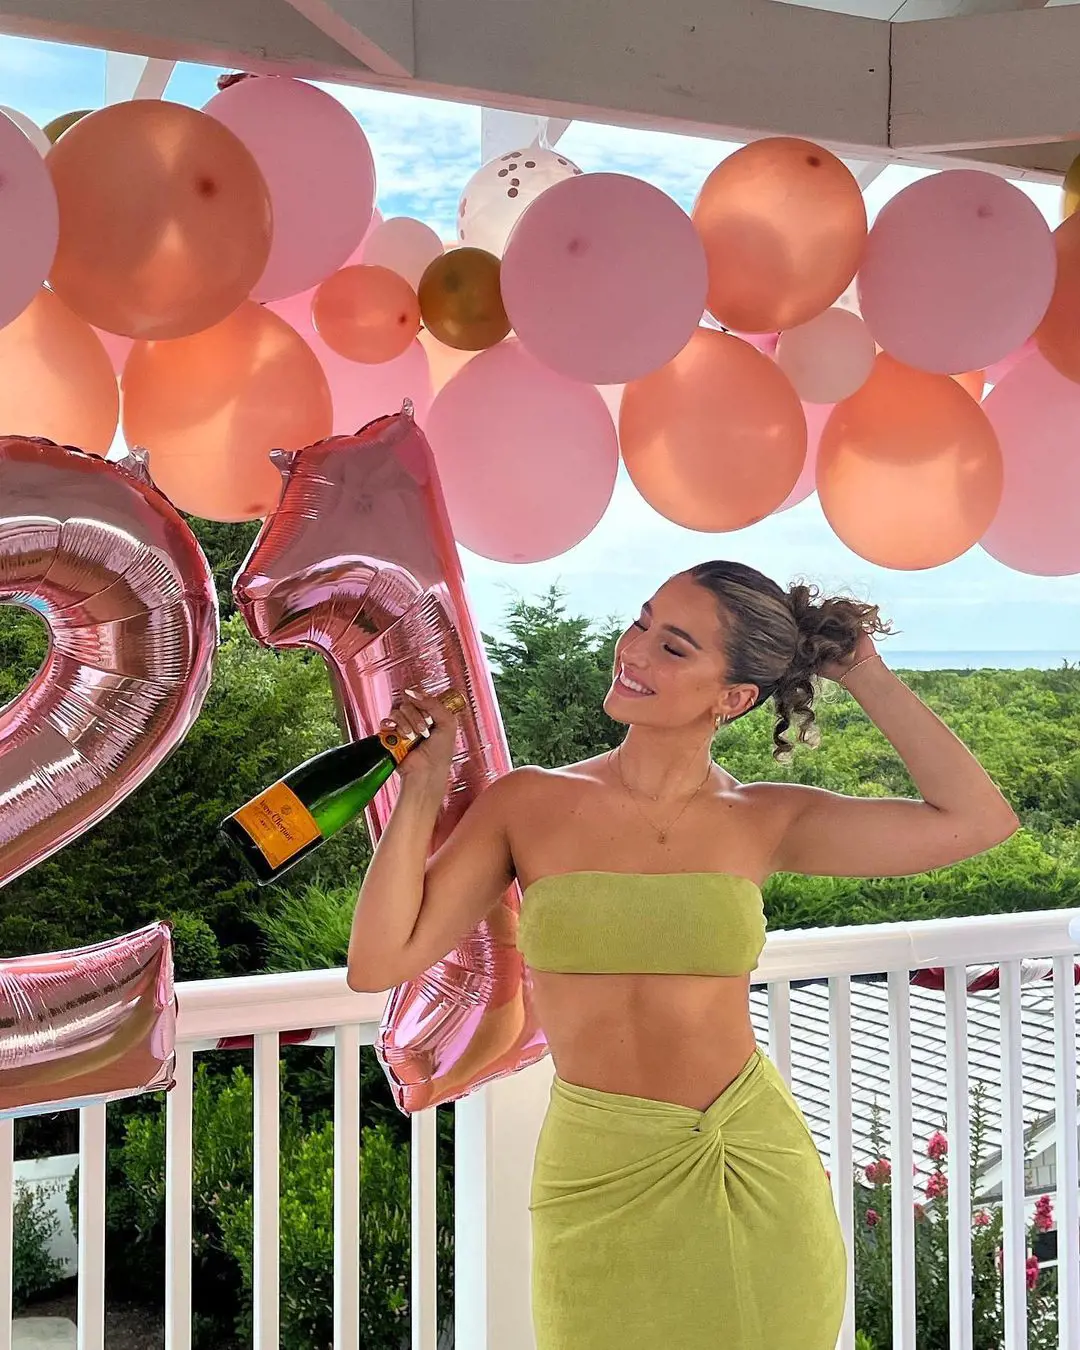 TikTok celebrity Gia celebrated her 21st birthday with her friends in August 2022